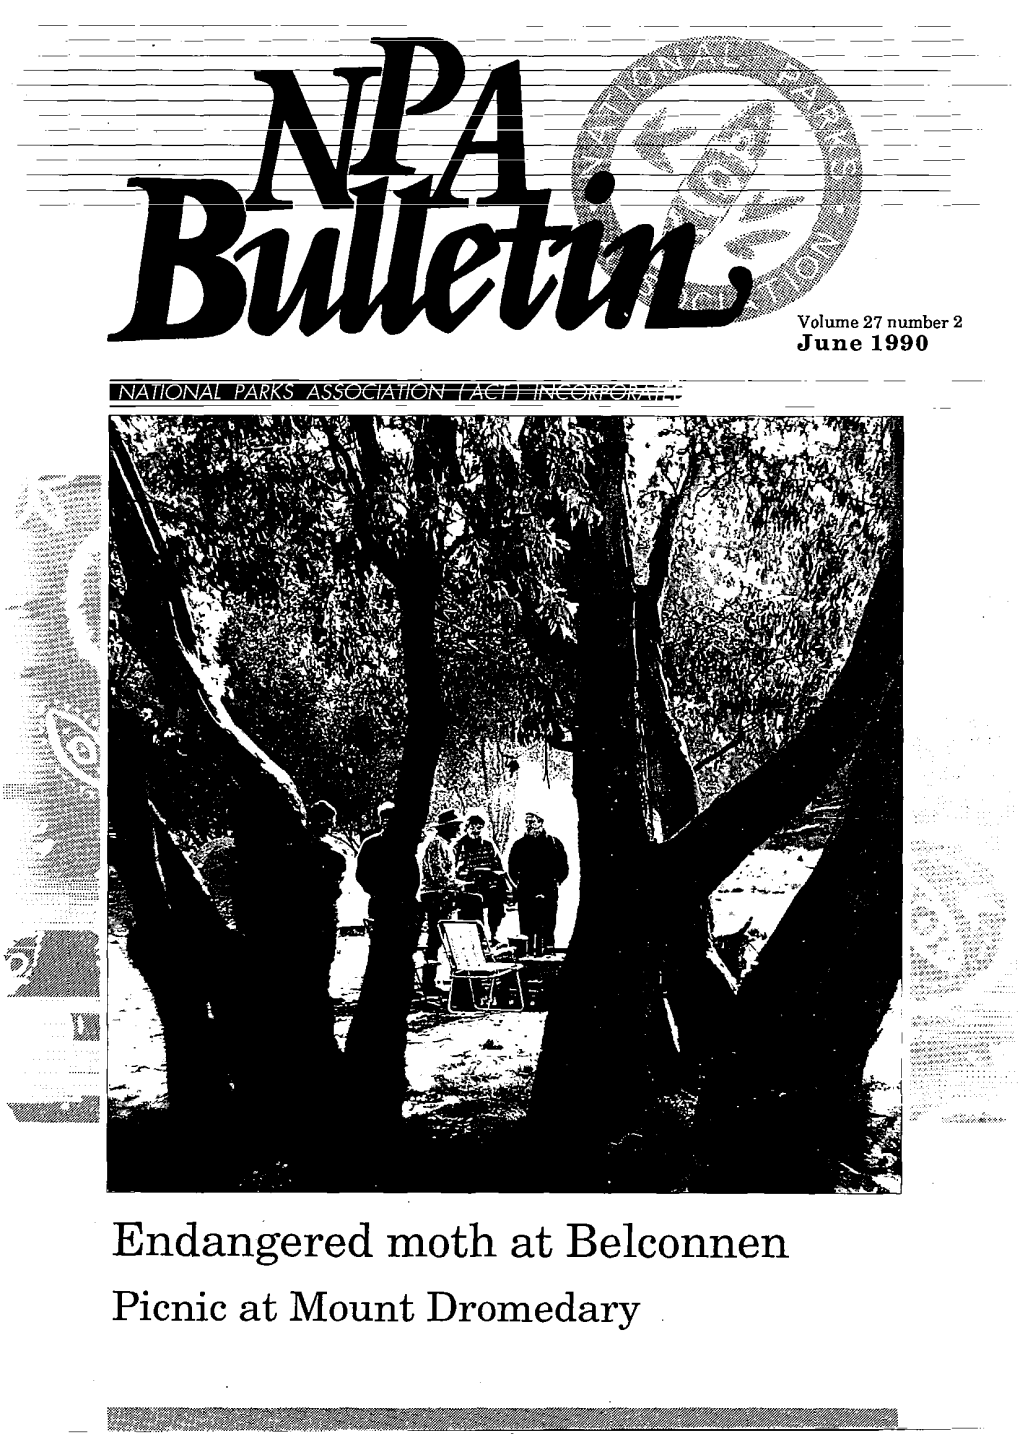 Endangered Moth at Belconnen Picnic at Mount Dromedary NPA BULLETIN Volume 27 Number 2 June 1990